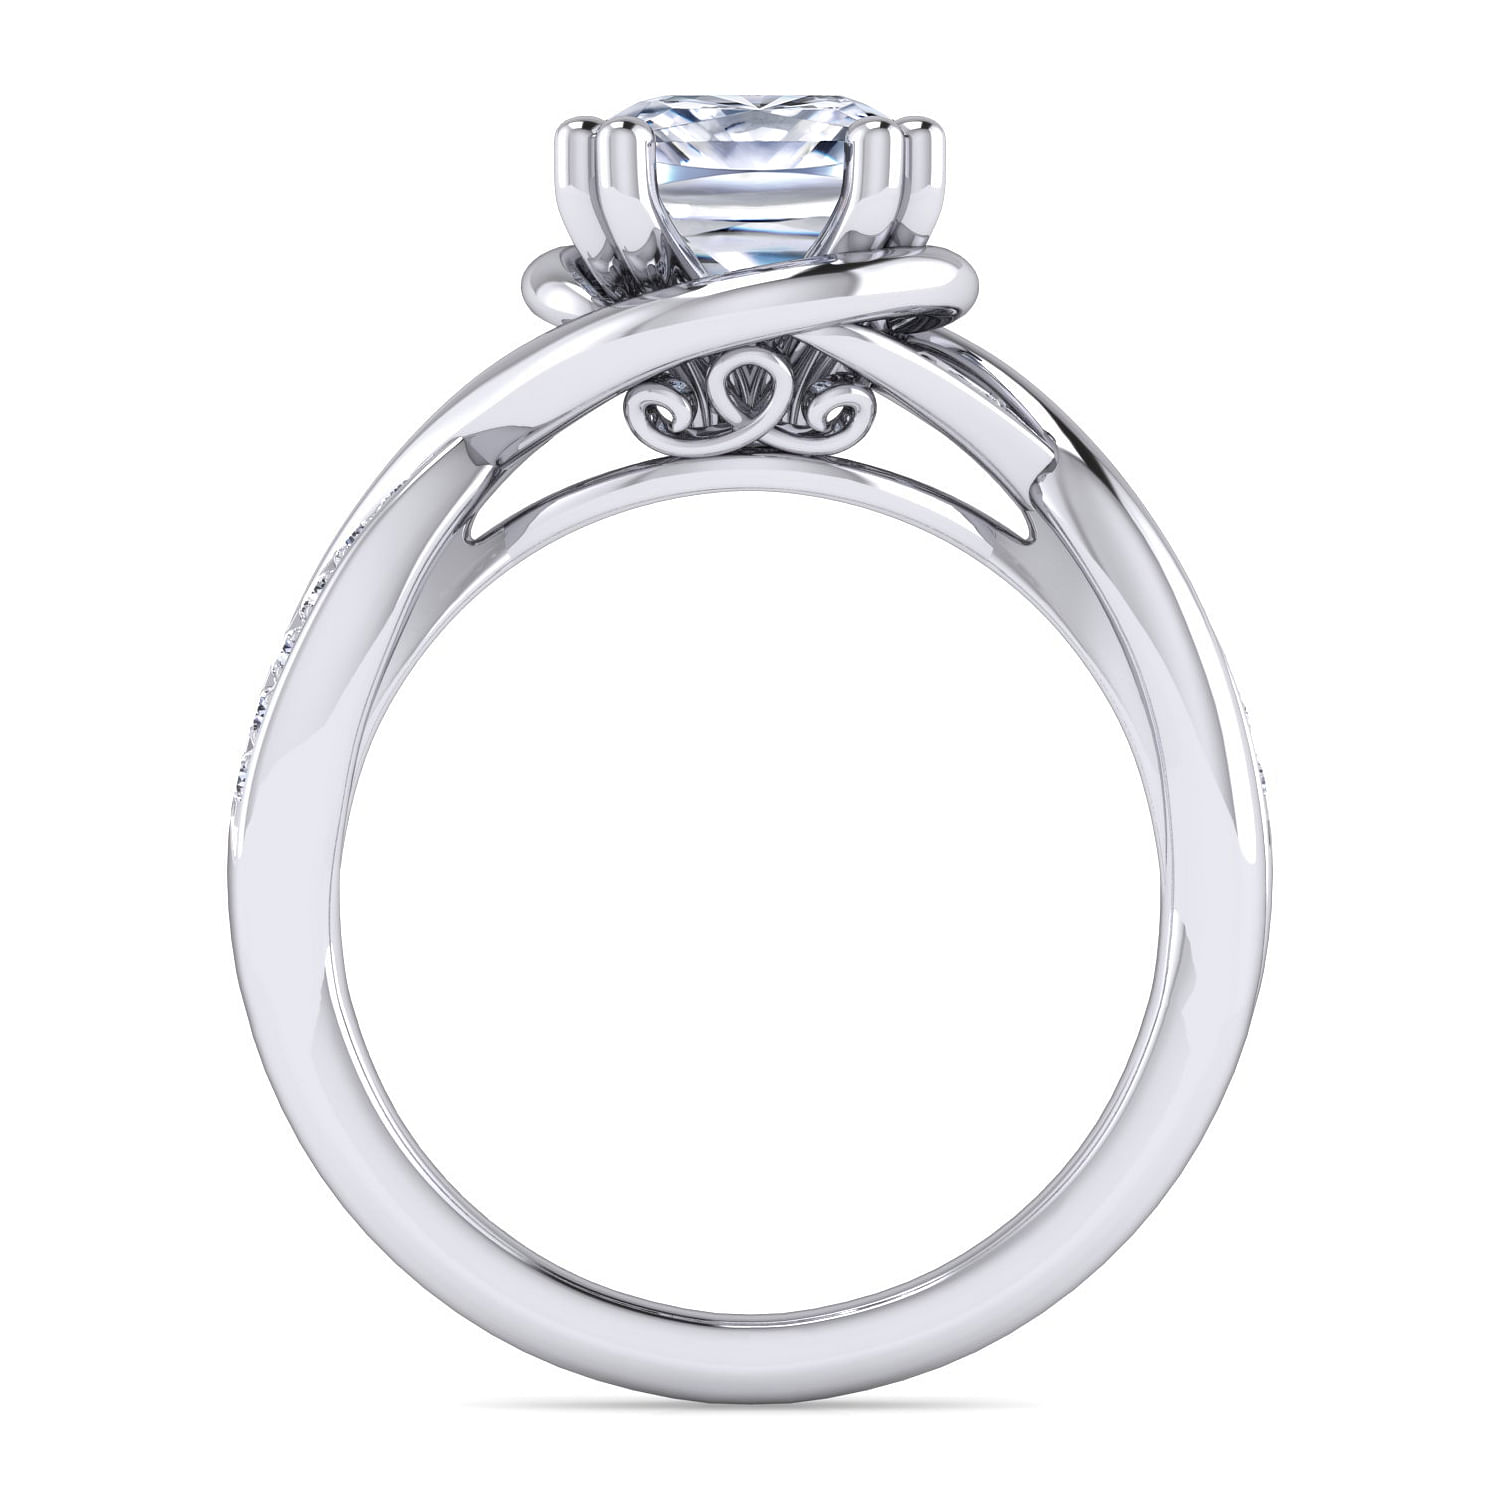 14K White Gold Twisted Cushion Cut Diamond Engagement Ring
